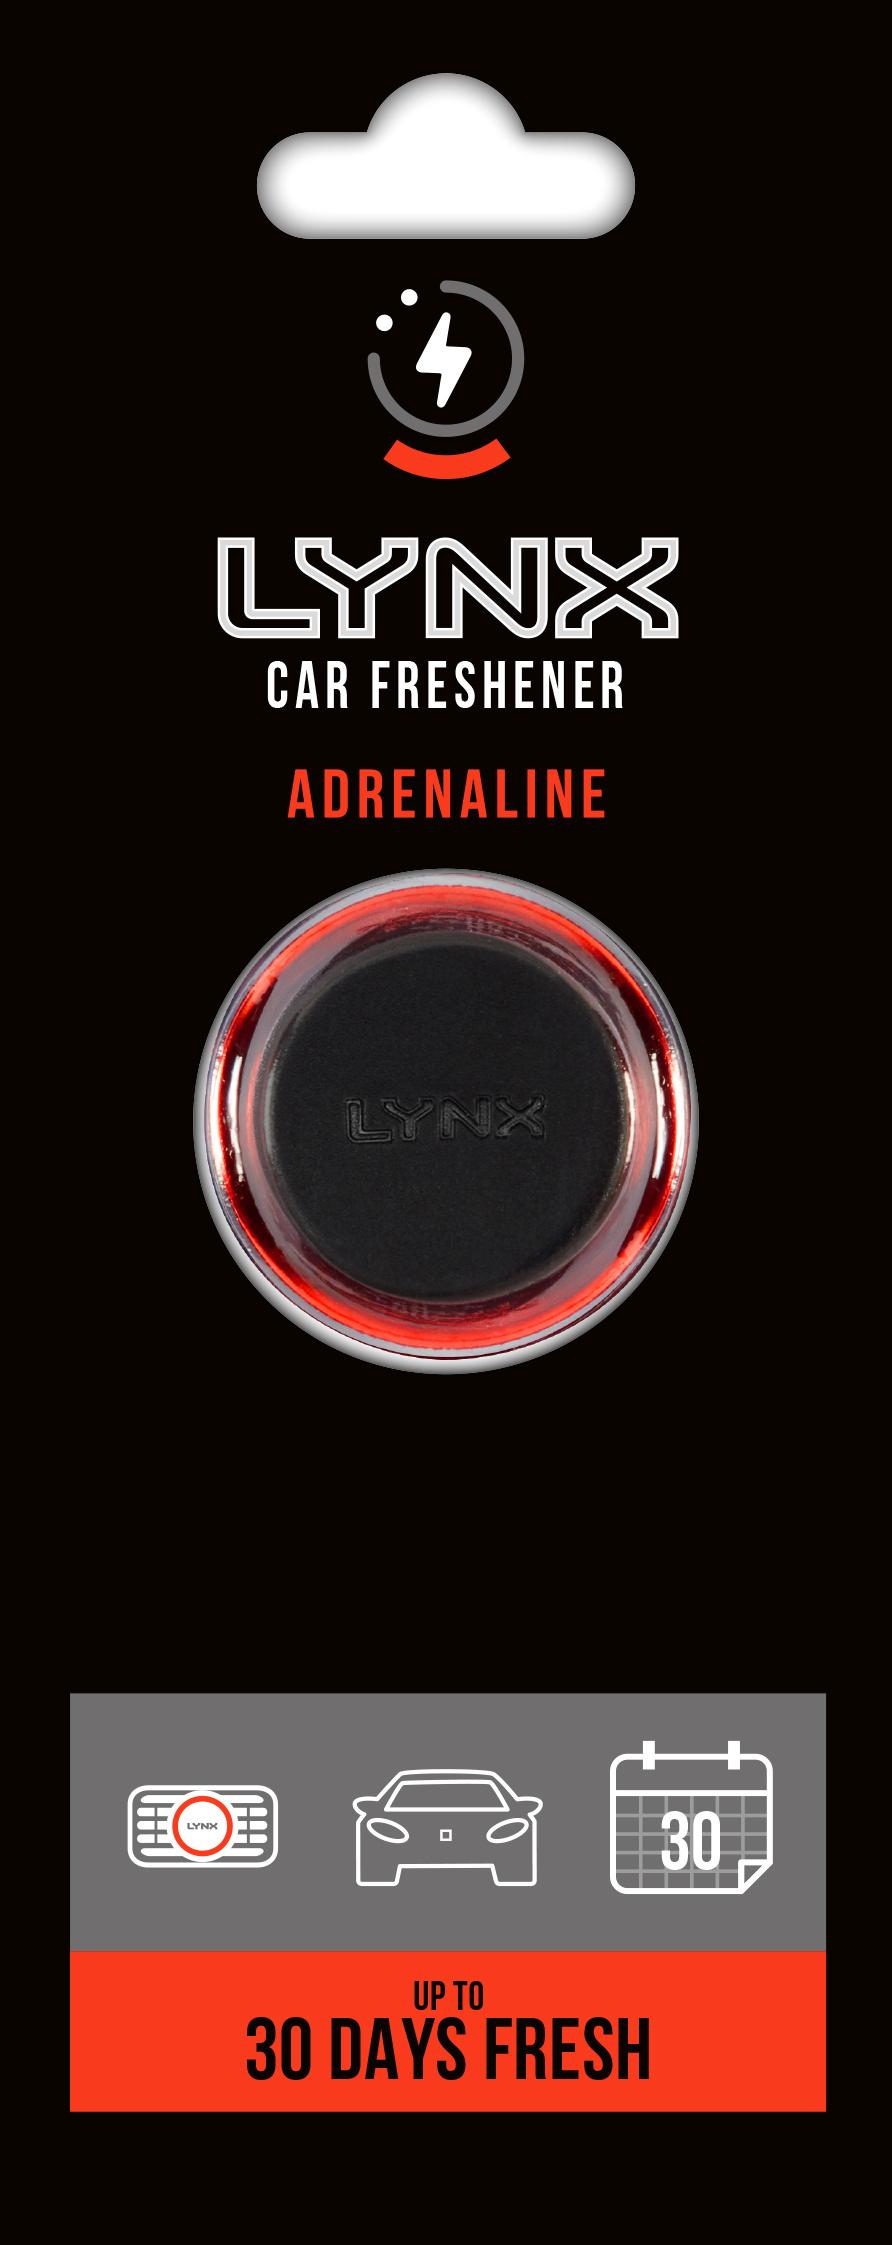 Lynx Mini Vent Adrenaline Air Freshener